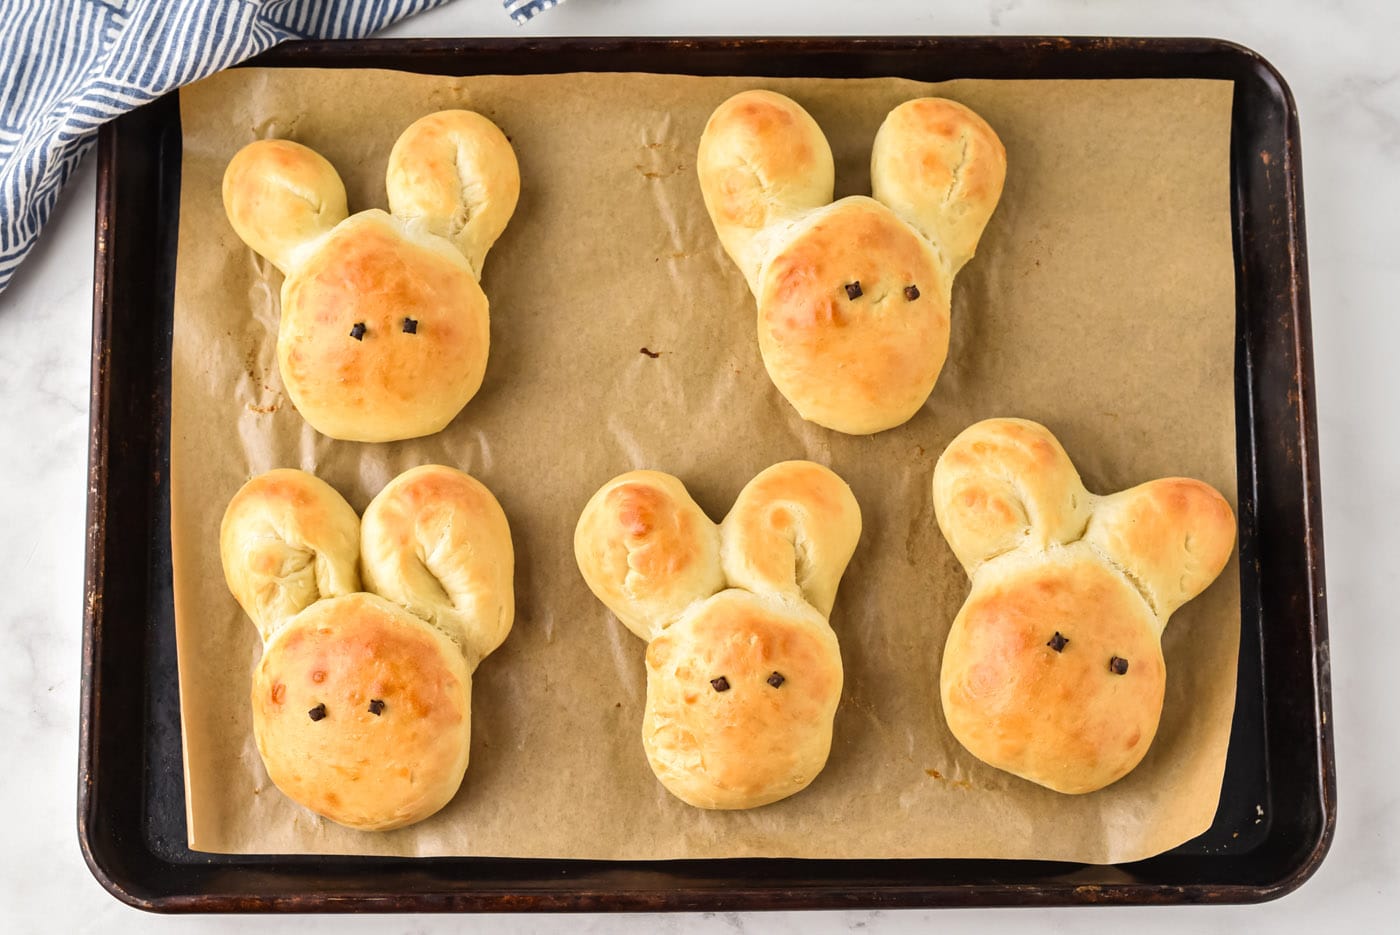 baked bunny bread rolls